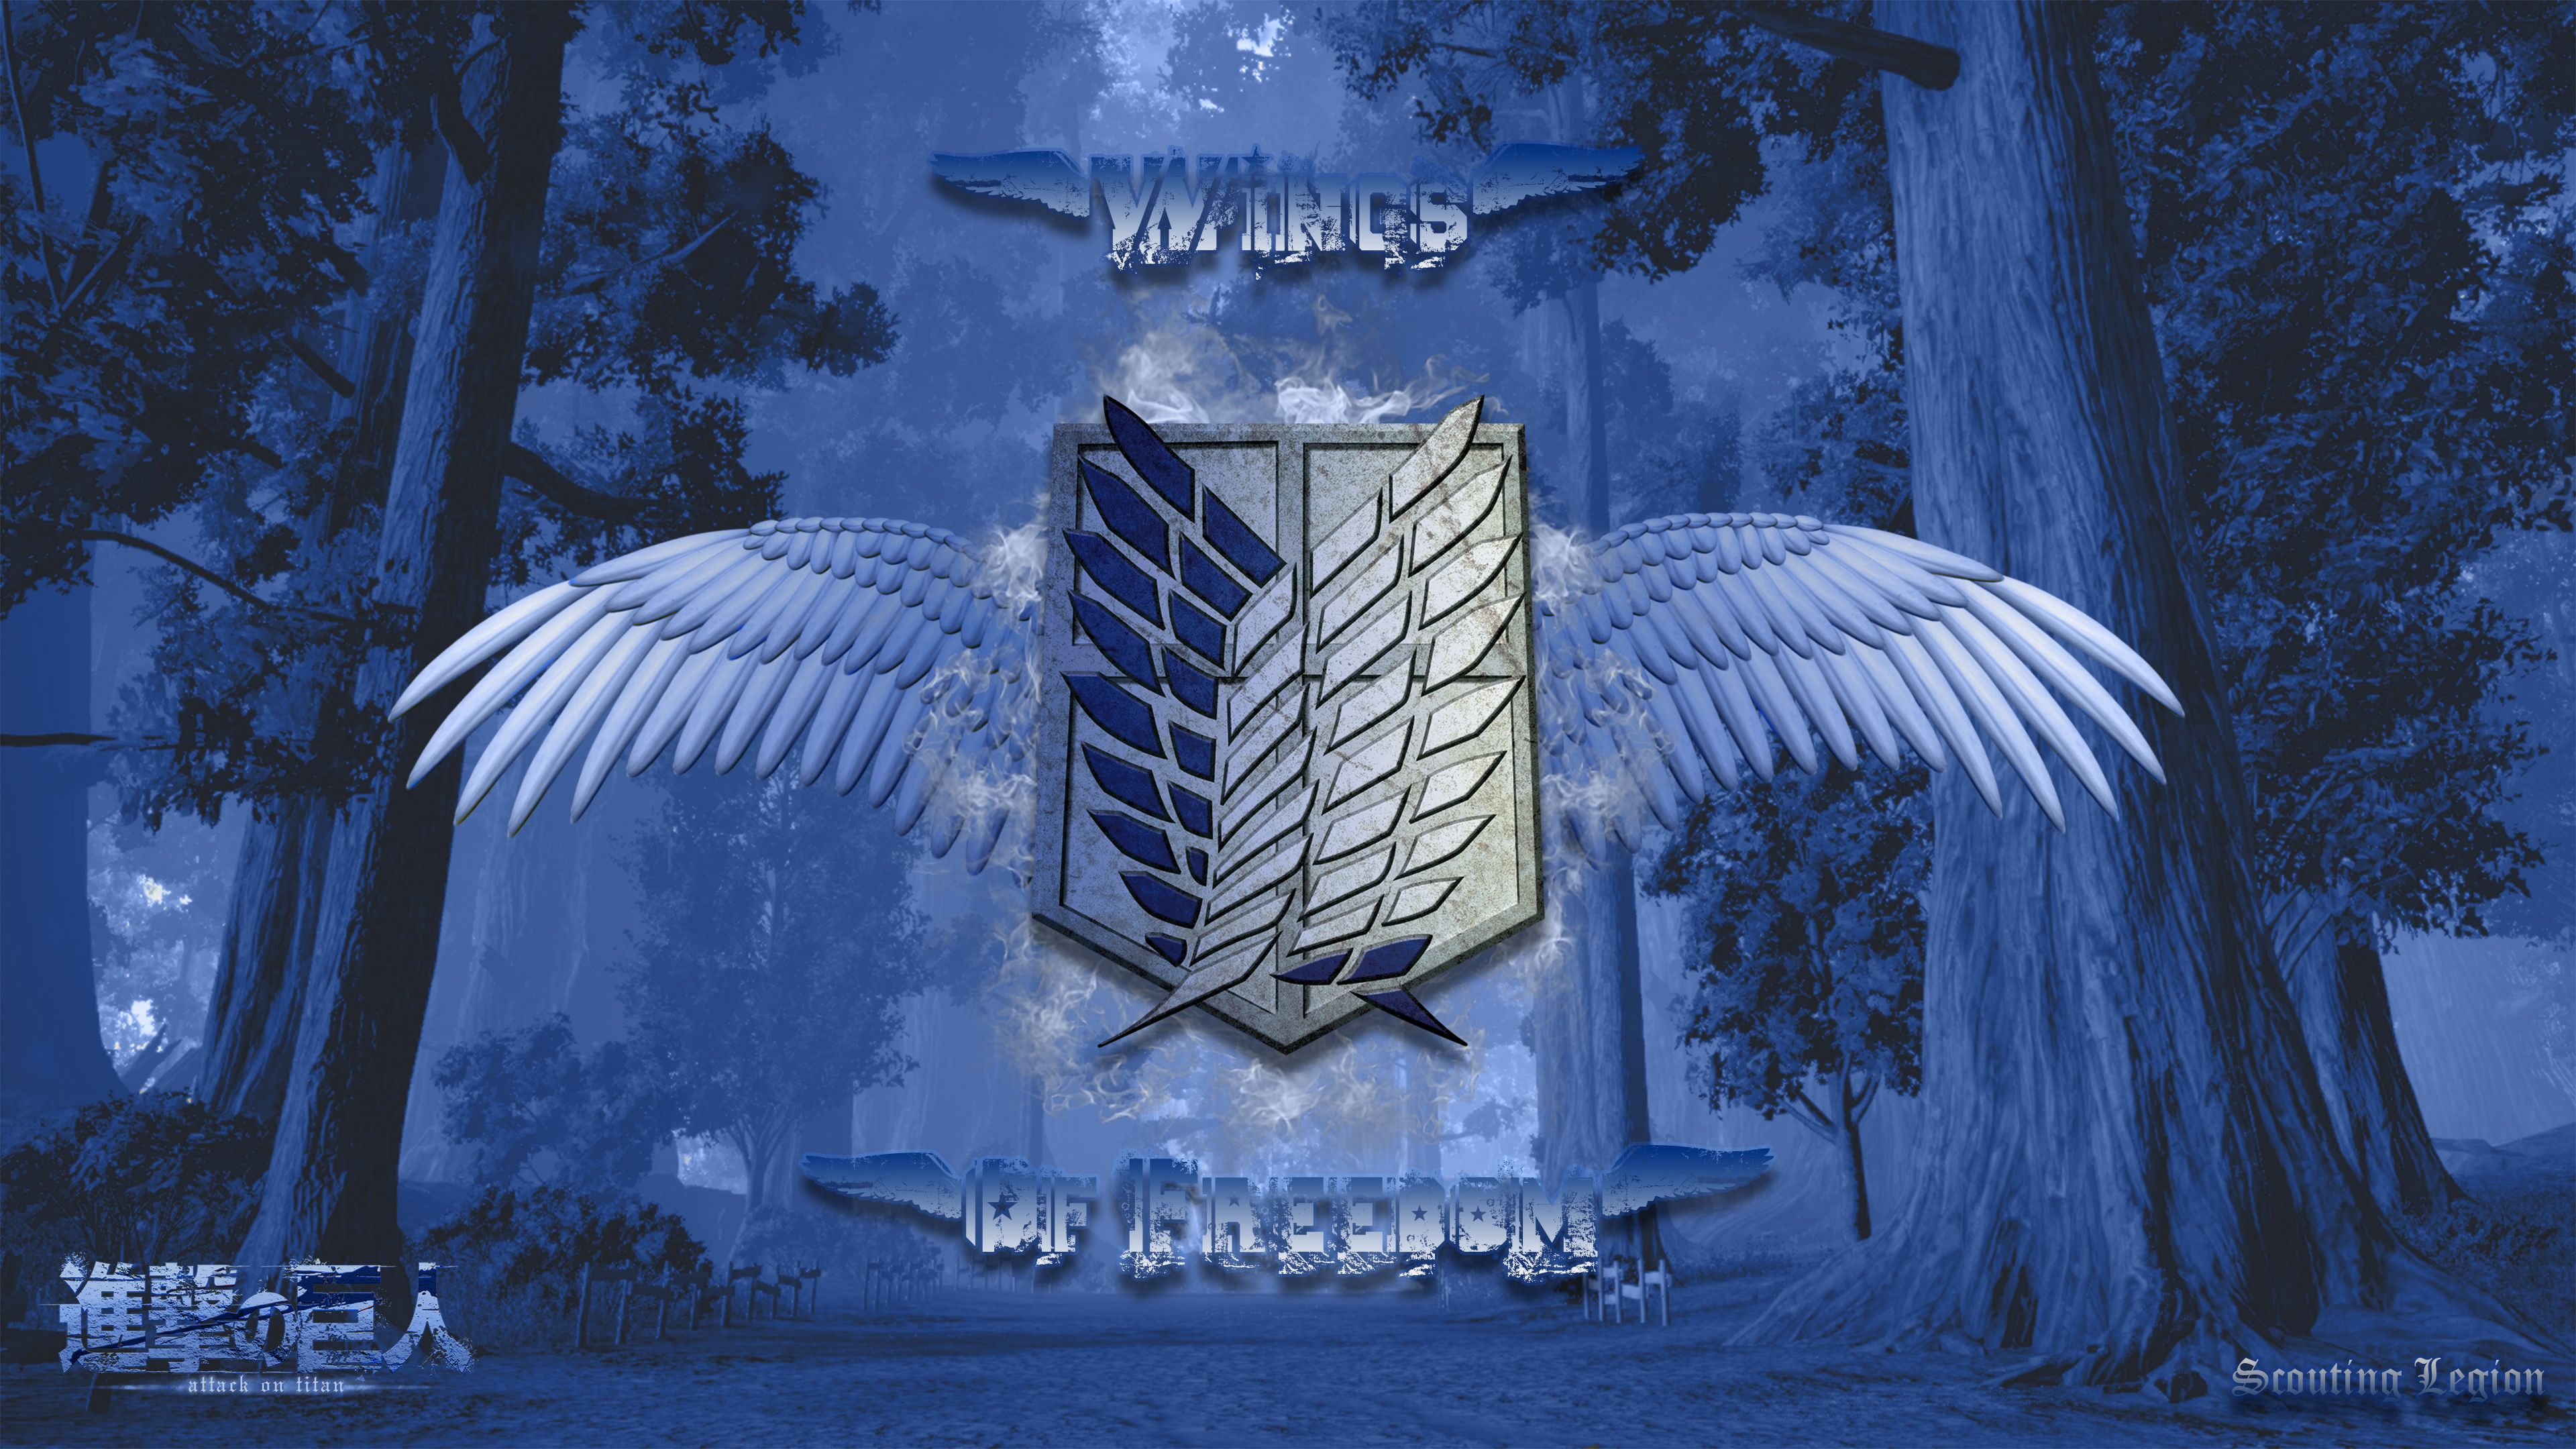 Scouting Legion: Wings Of Freedom 4k Ultra HD Wallpapers